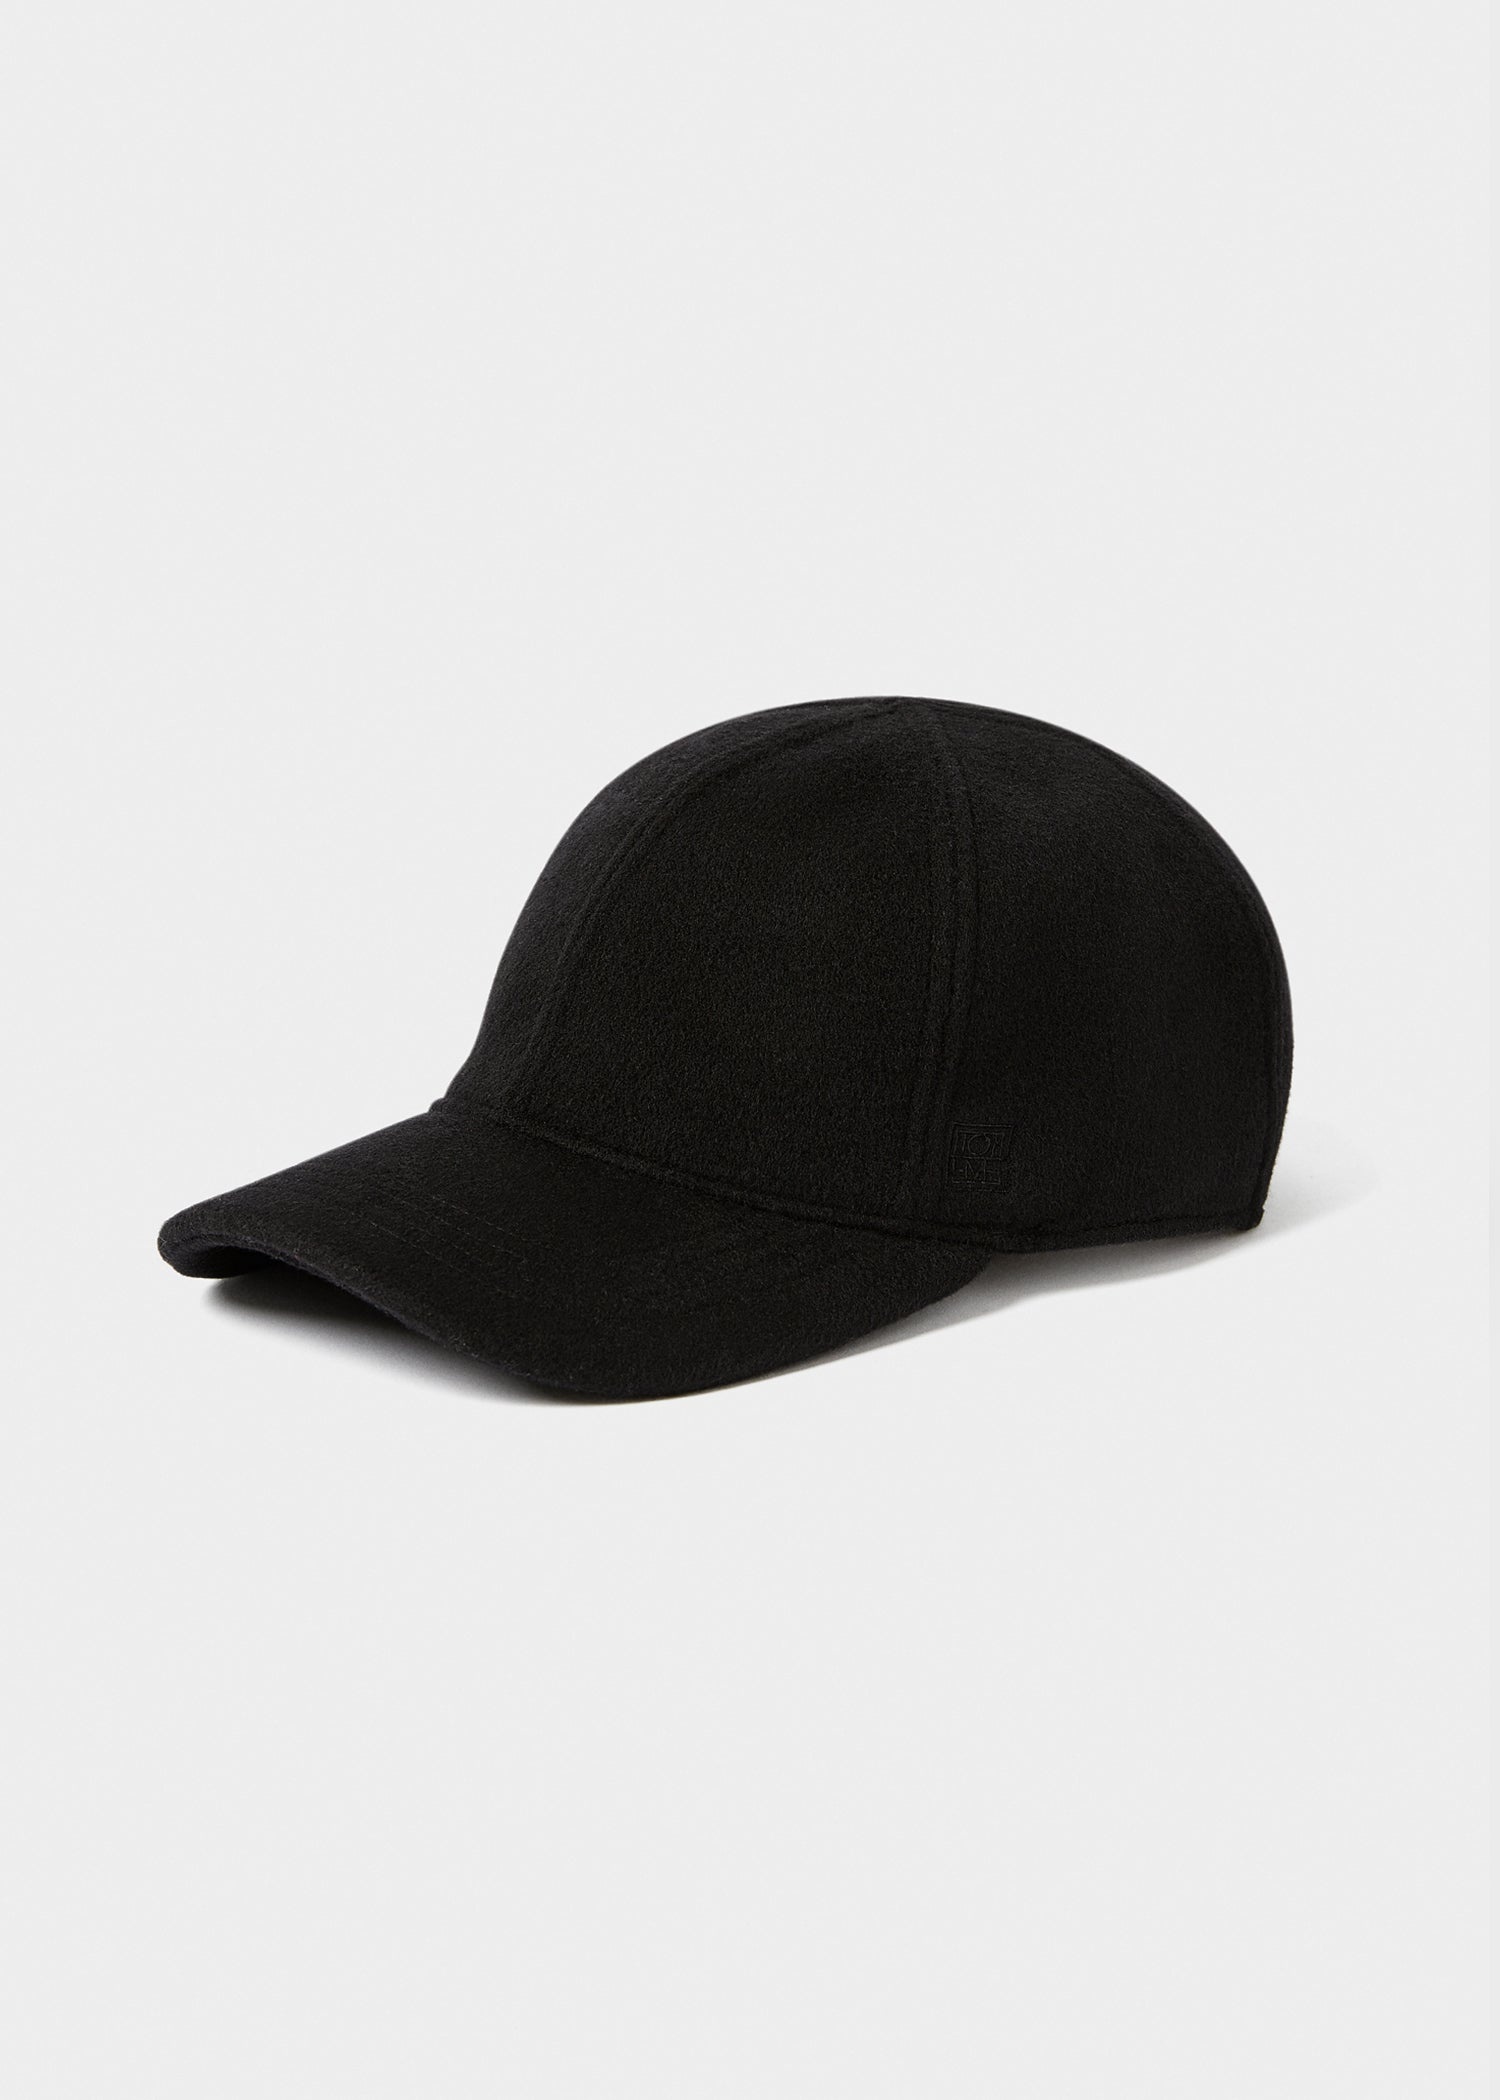 Doublé baseball cap black - 1